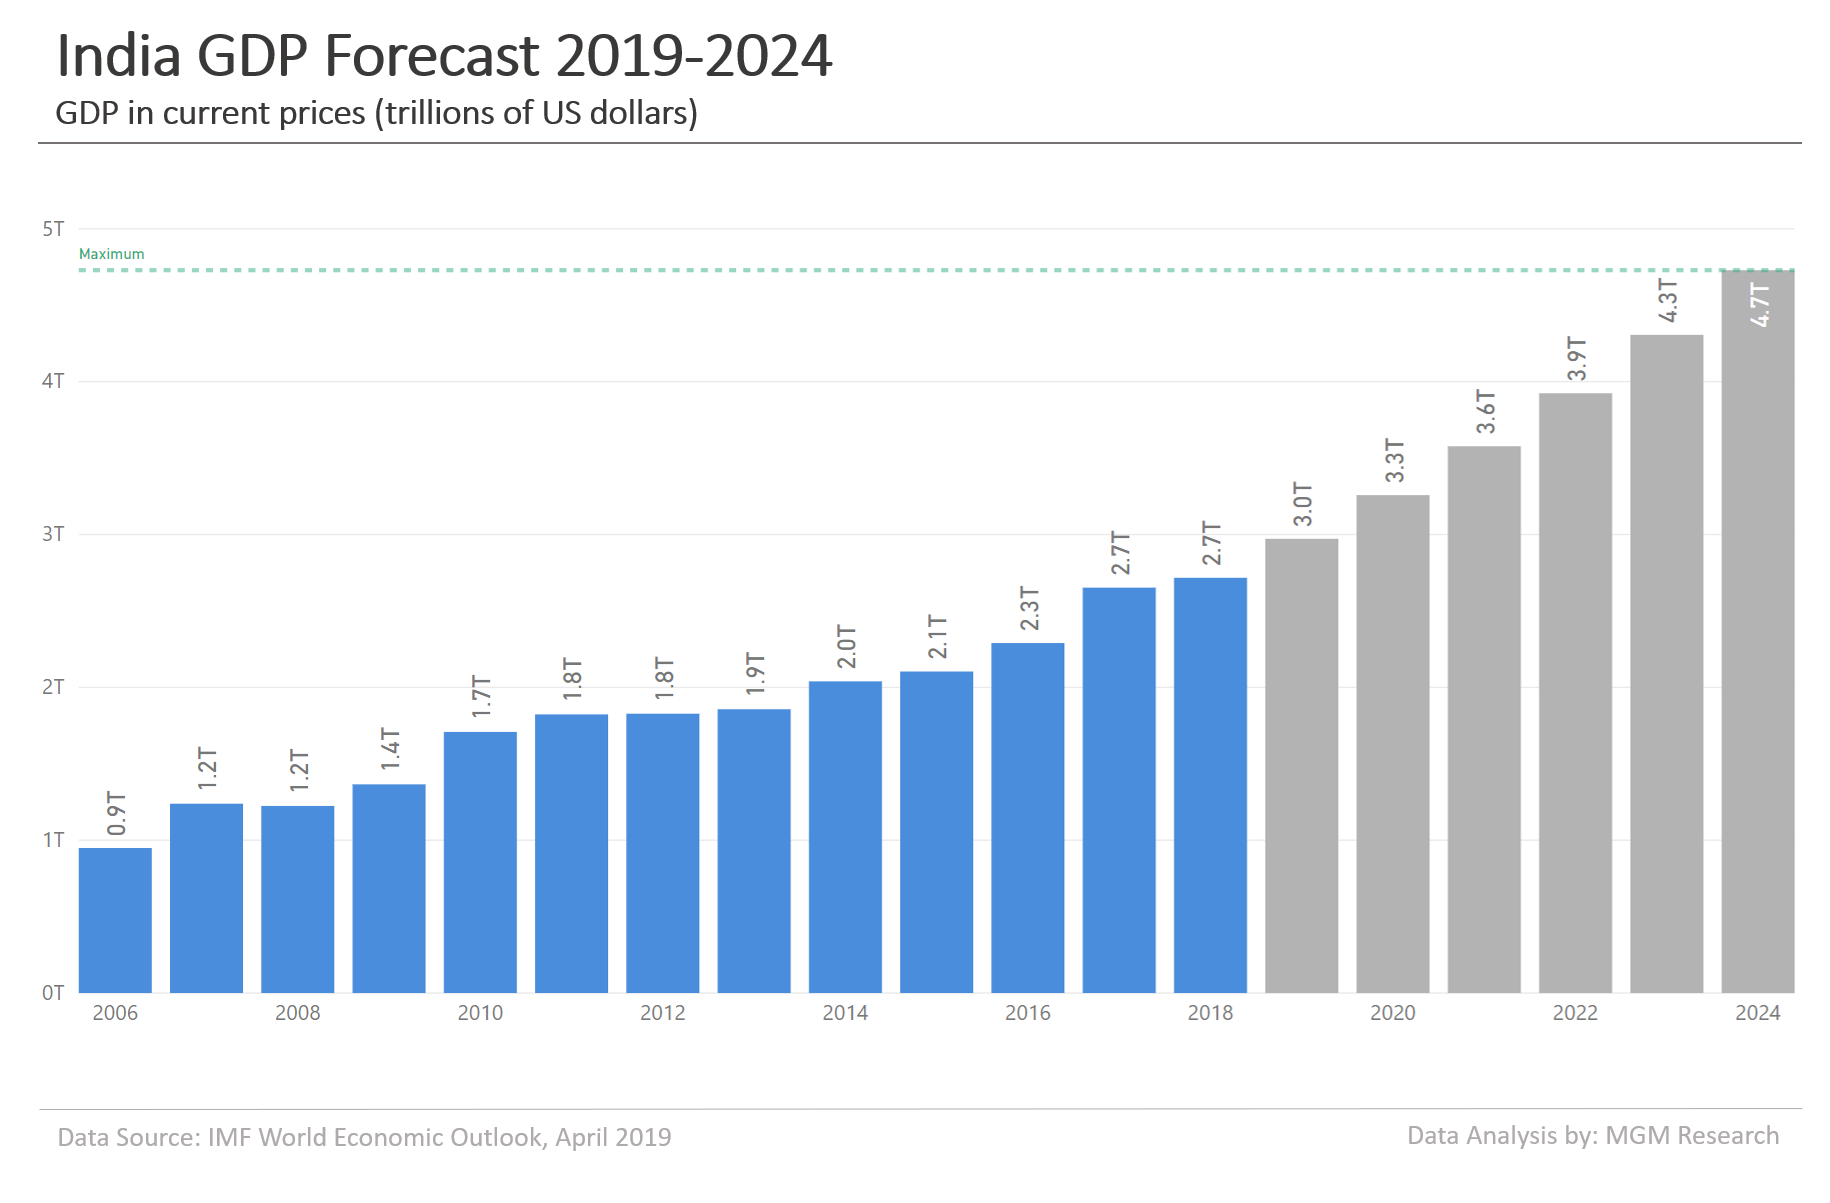 India GDP forecast 2019-2024